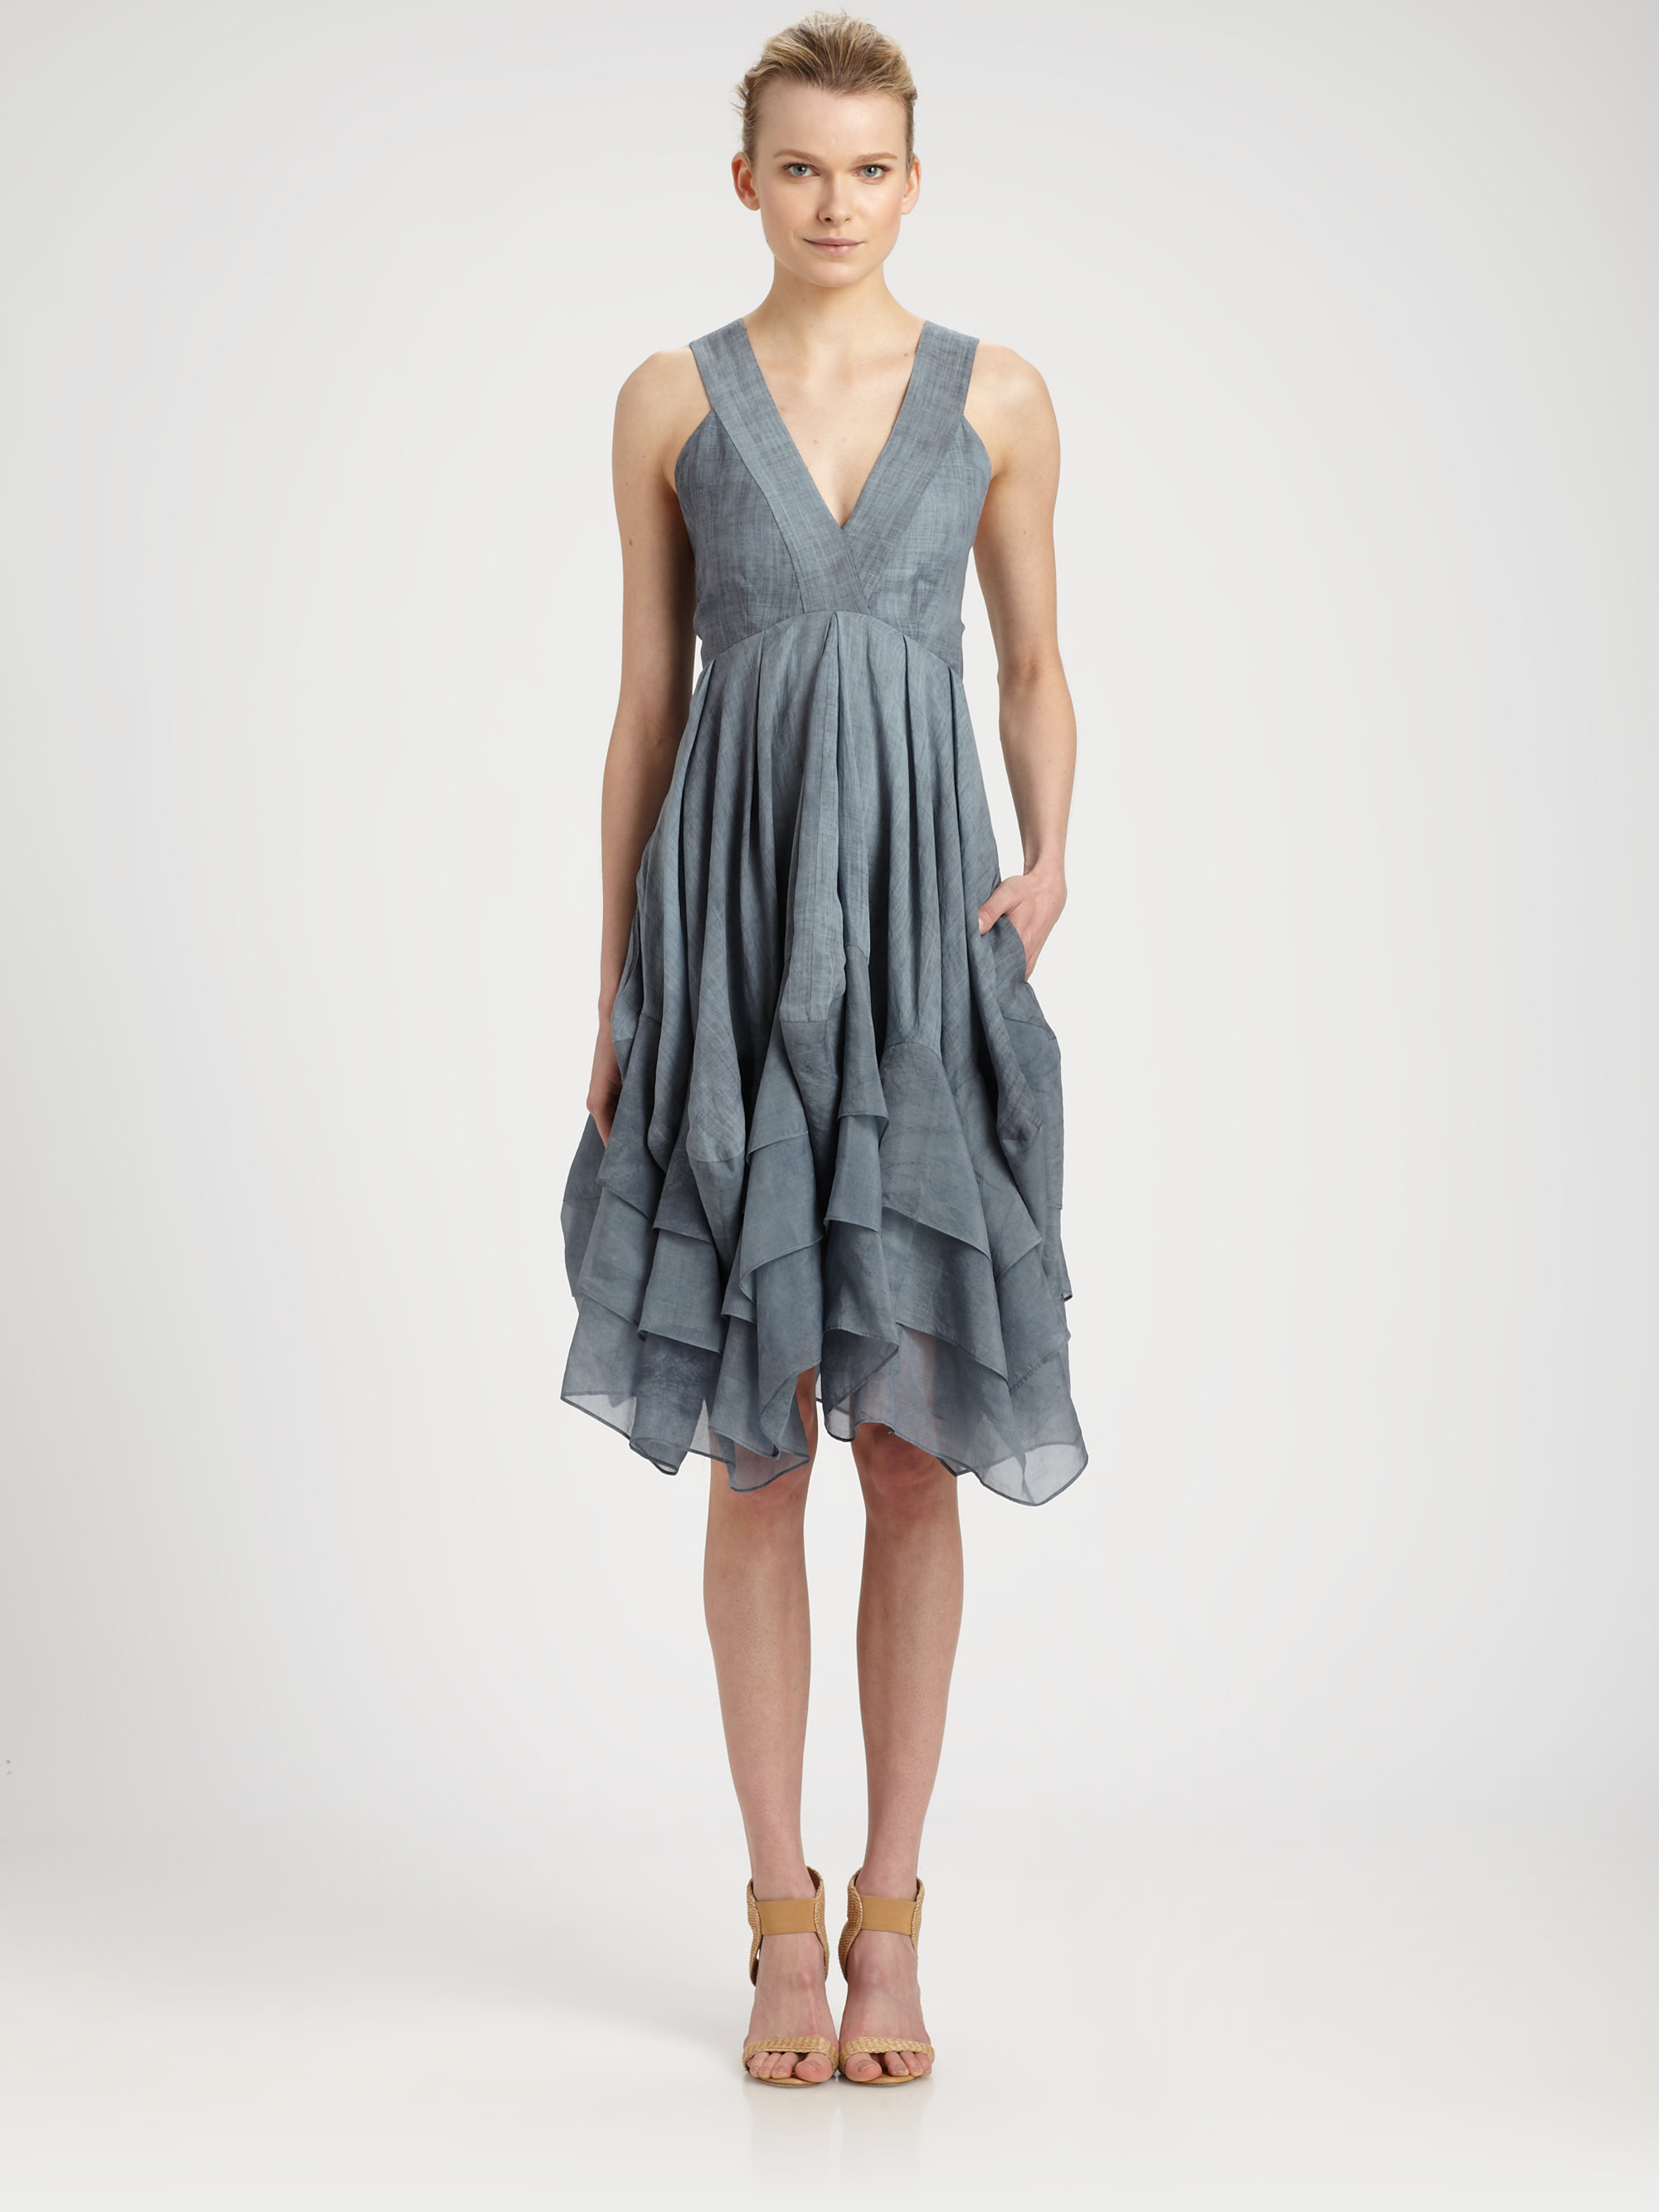 Lyst - Donna Karan Floating Air Dress in Gray